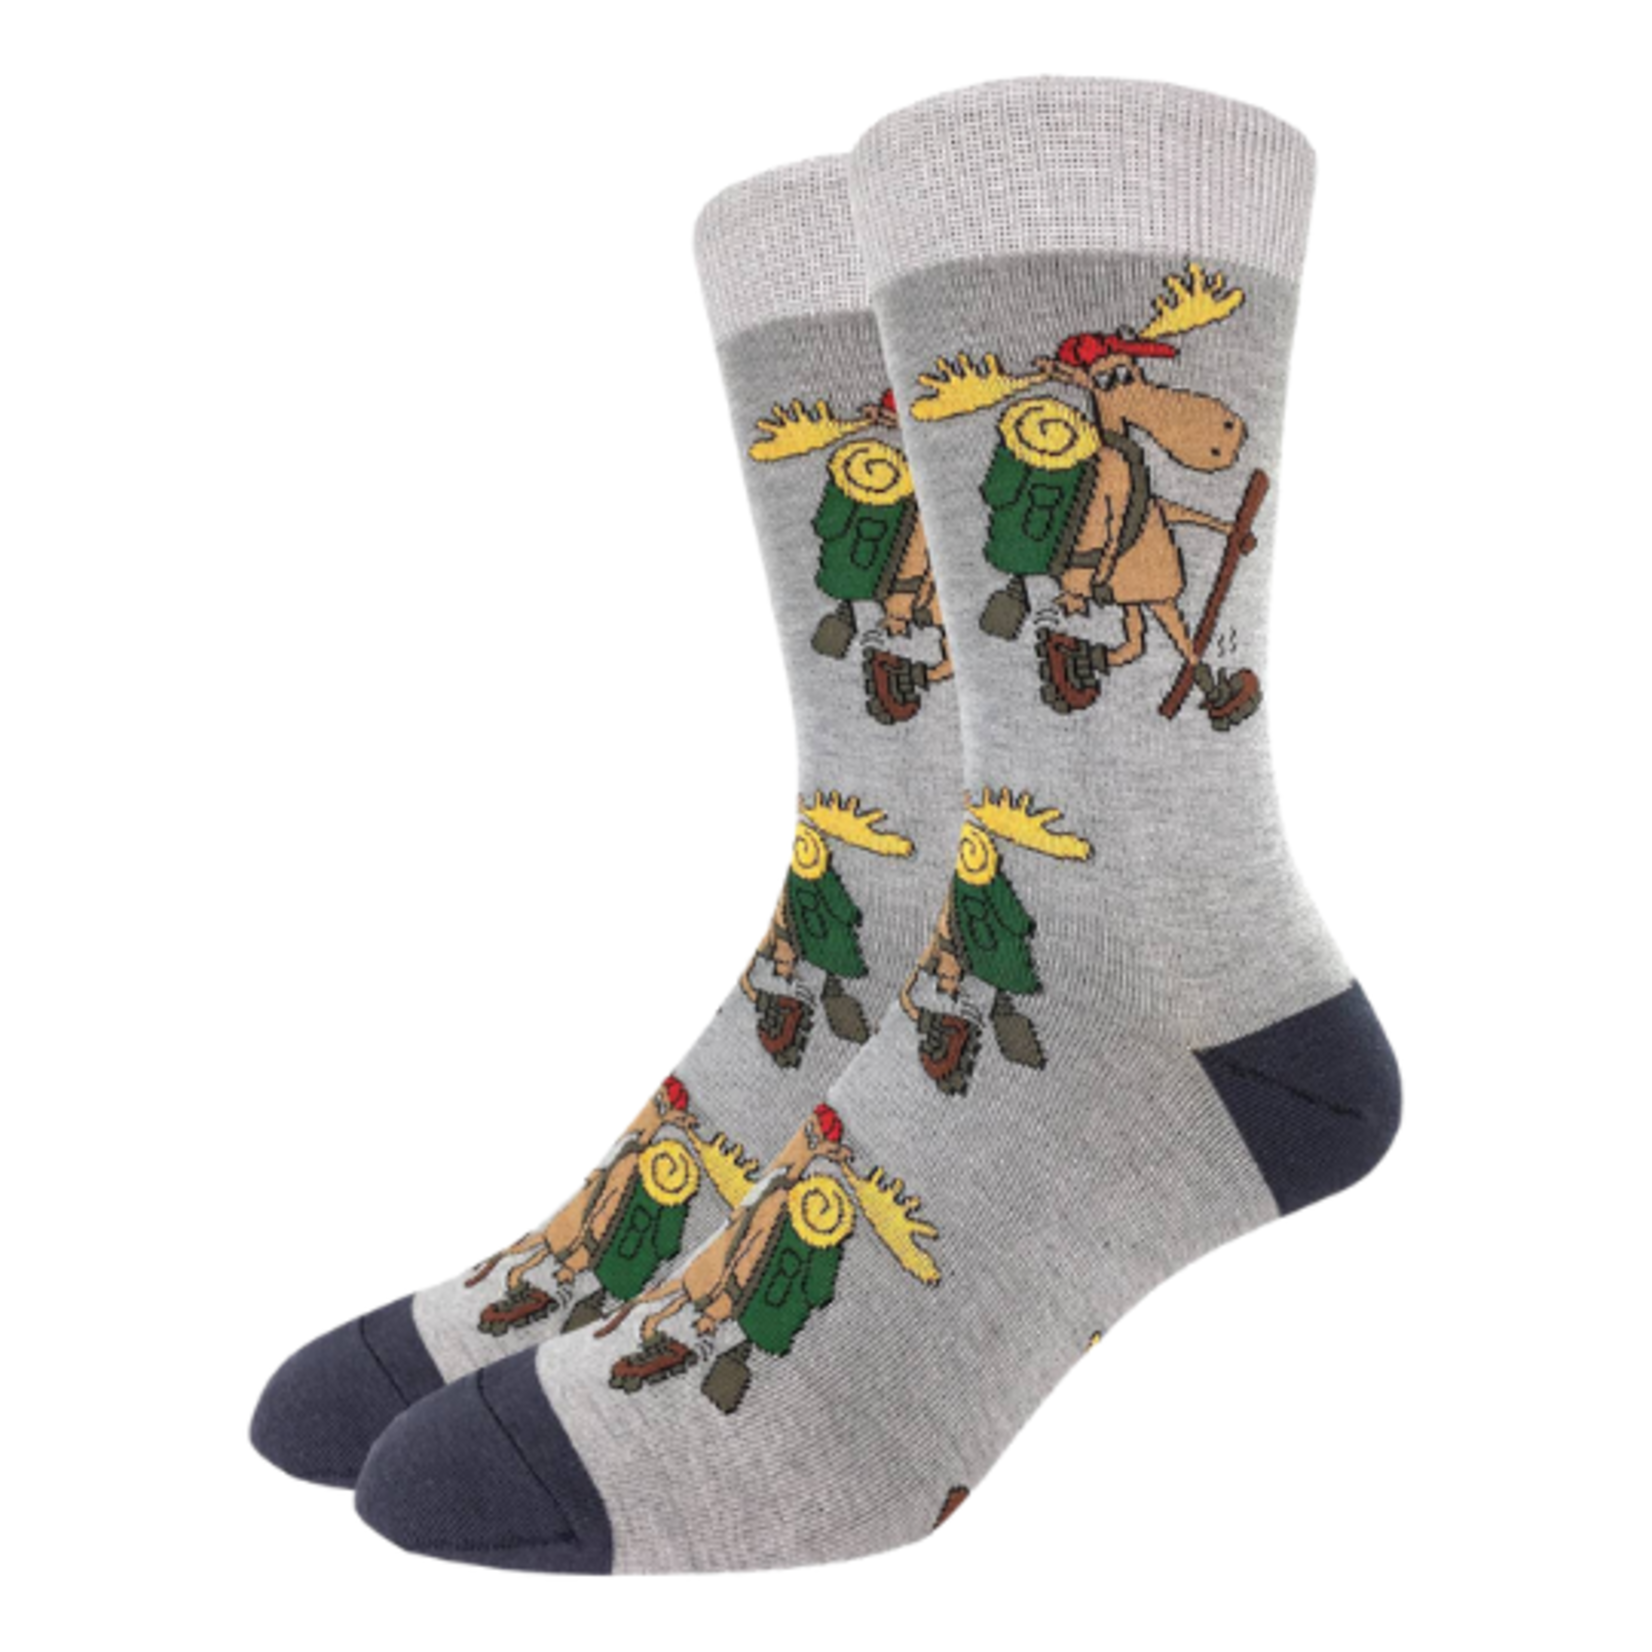 Hiking Moose Sock - Men’s Size 13 - 17